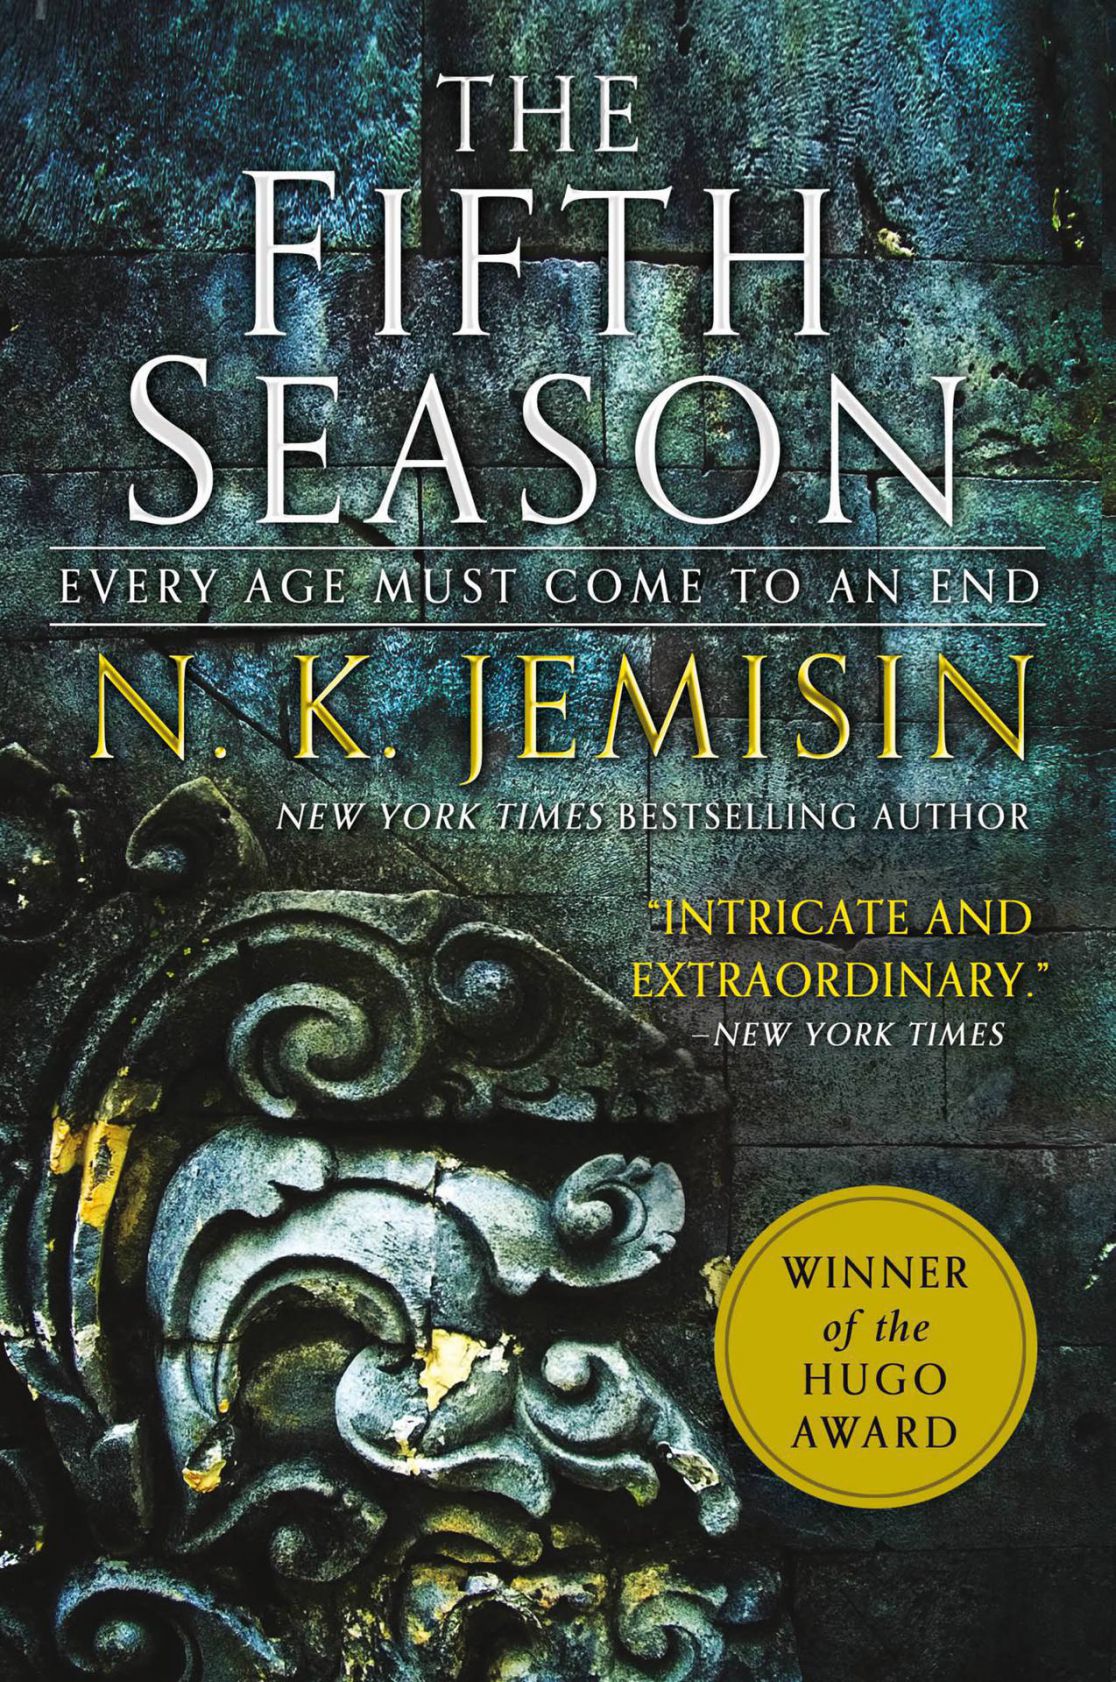 The Fifth Season (The Broken Earth Book 1) by N. K. Jemisin Kindle ebook $2.99 at Amazon/Google Play